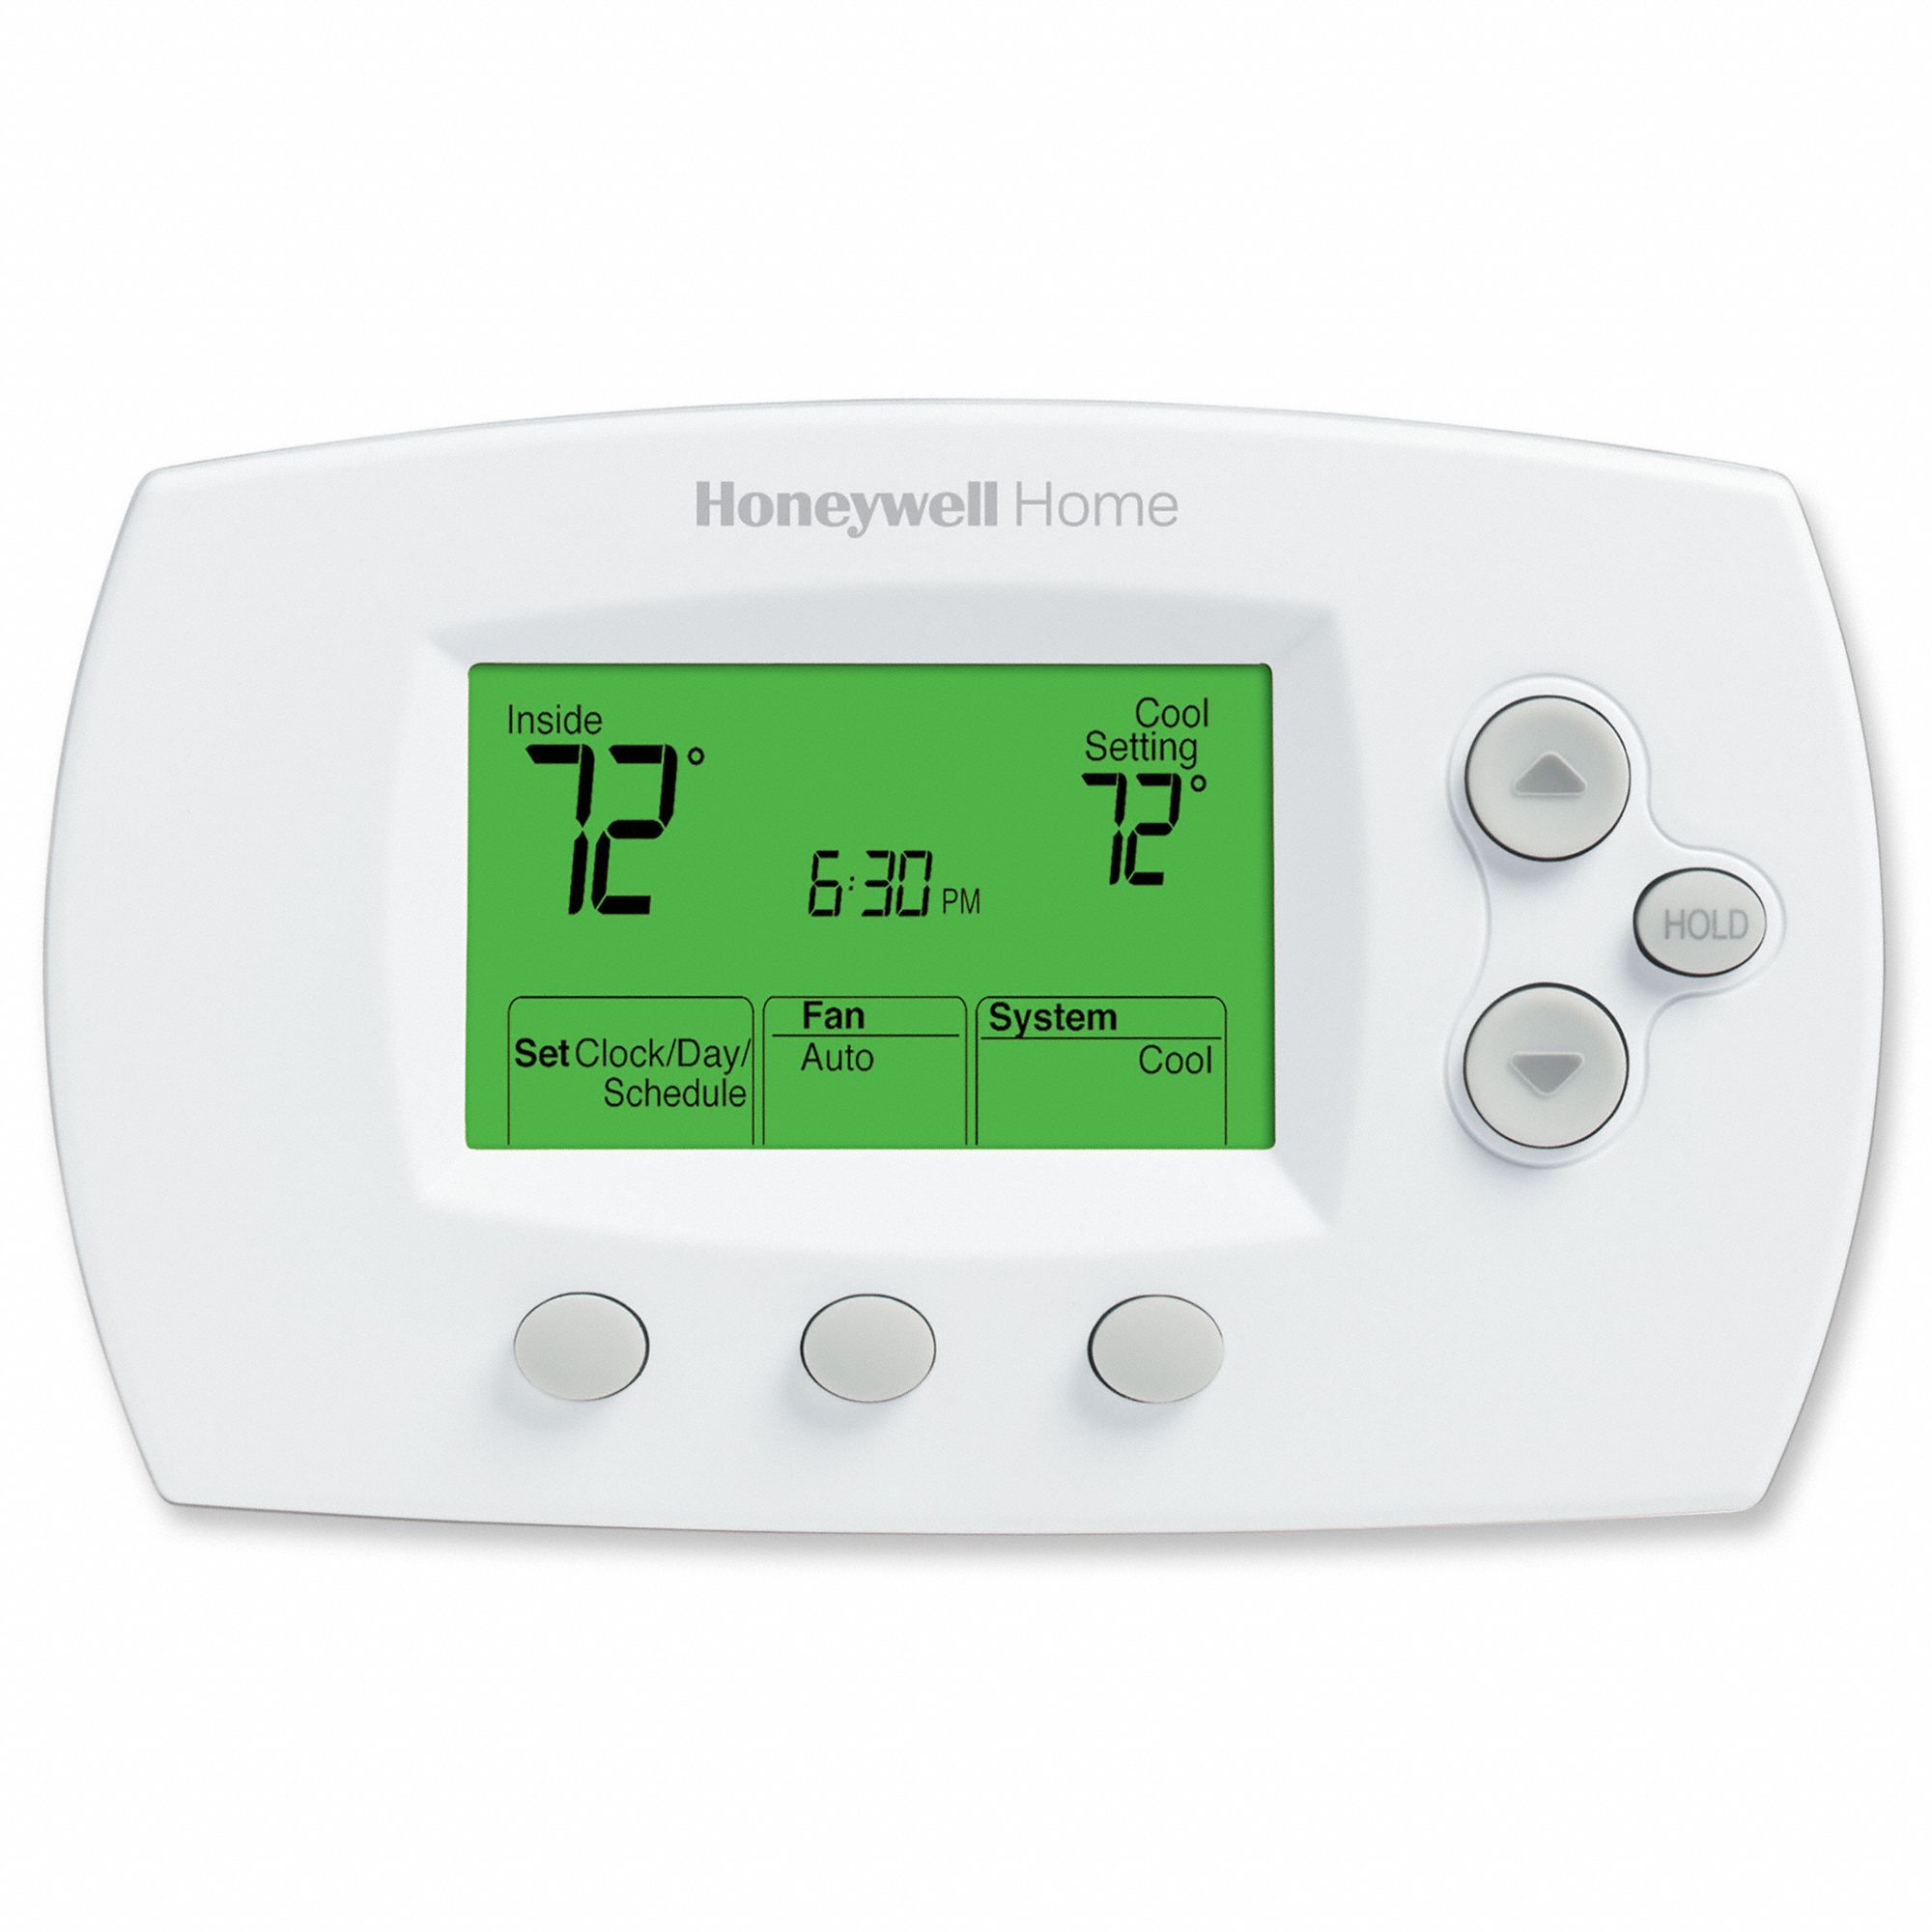 Older honeywell thermostat photos